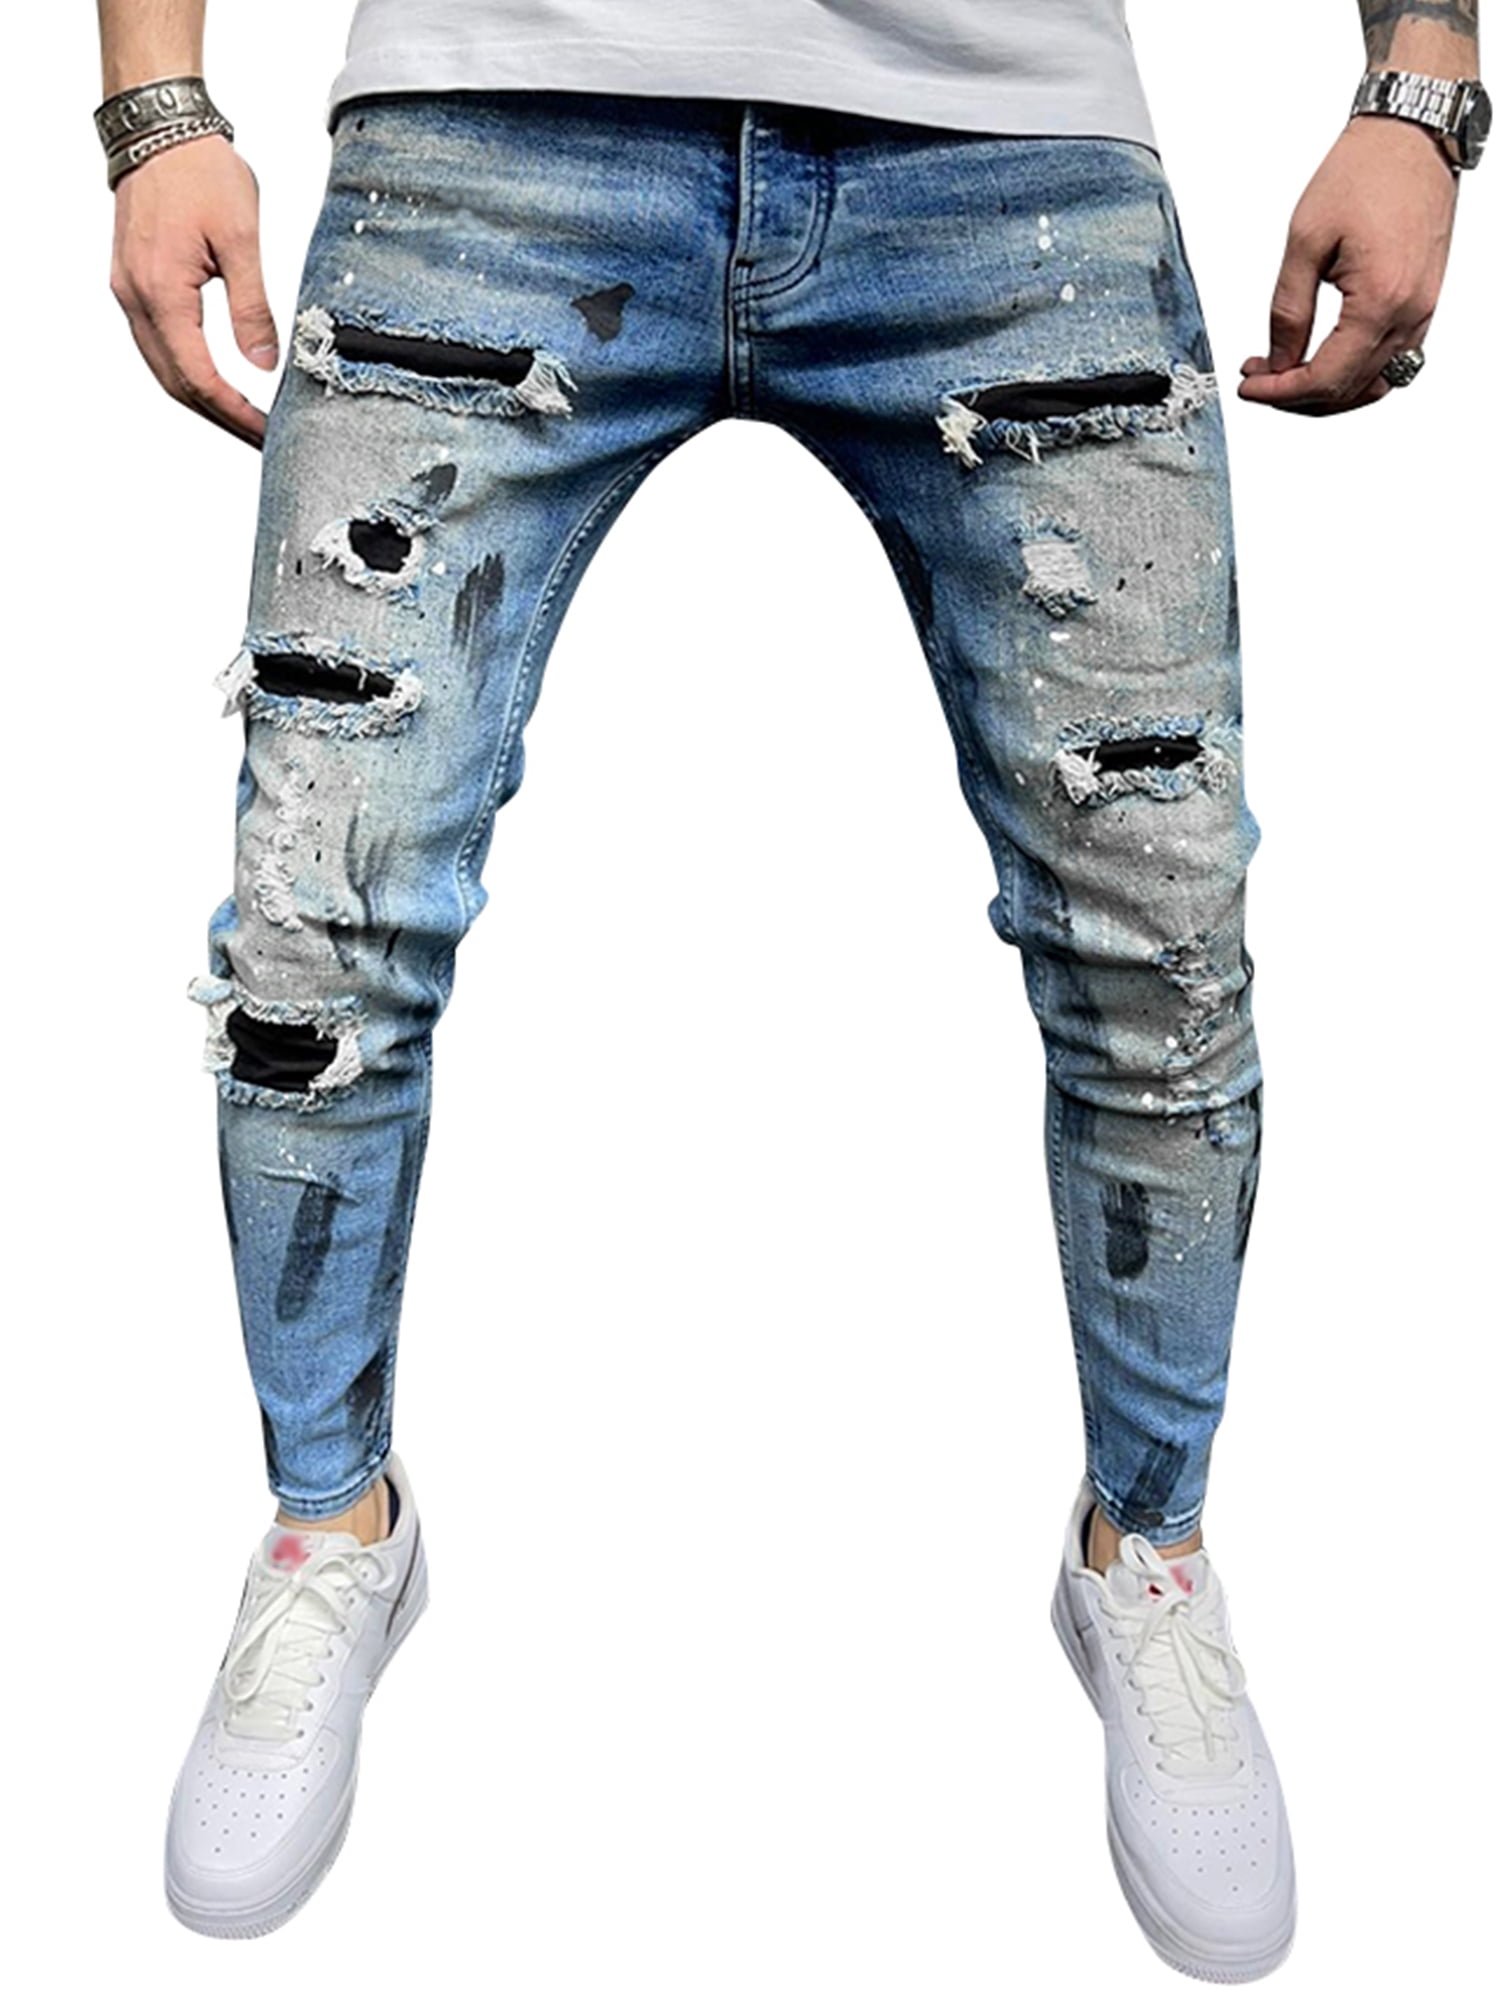 Buy Men's Distressed Ripped Holes Skinny Jeans Mens Slim Fit Denim Pants  Patch Tapered Leg Jean Paint pant (Medium31.5W,Gray), Gray, Medium31.5W at  Amazon.in